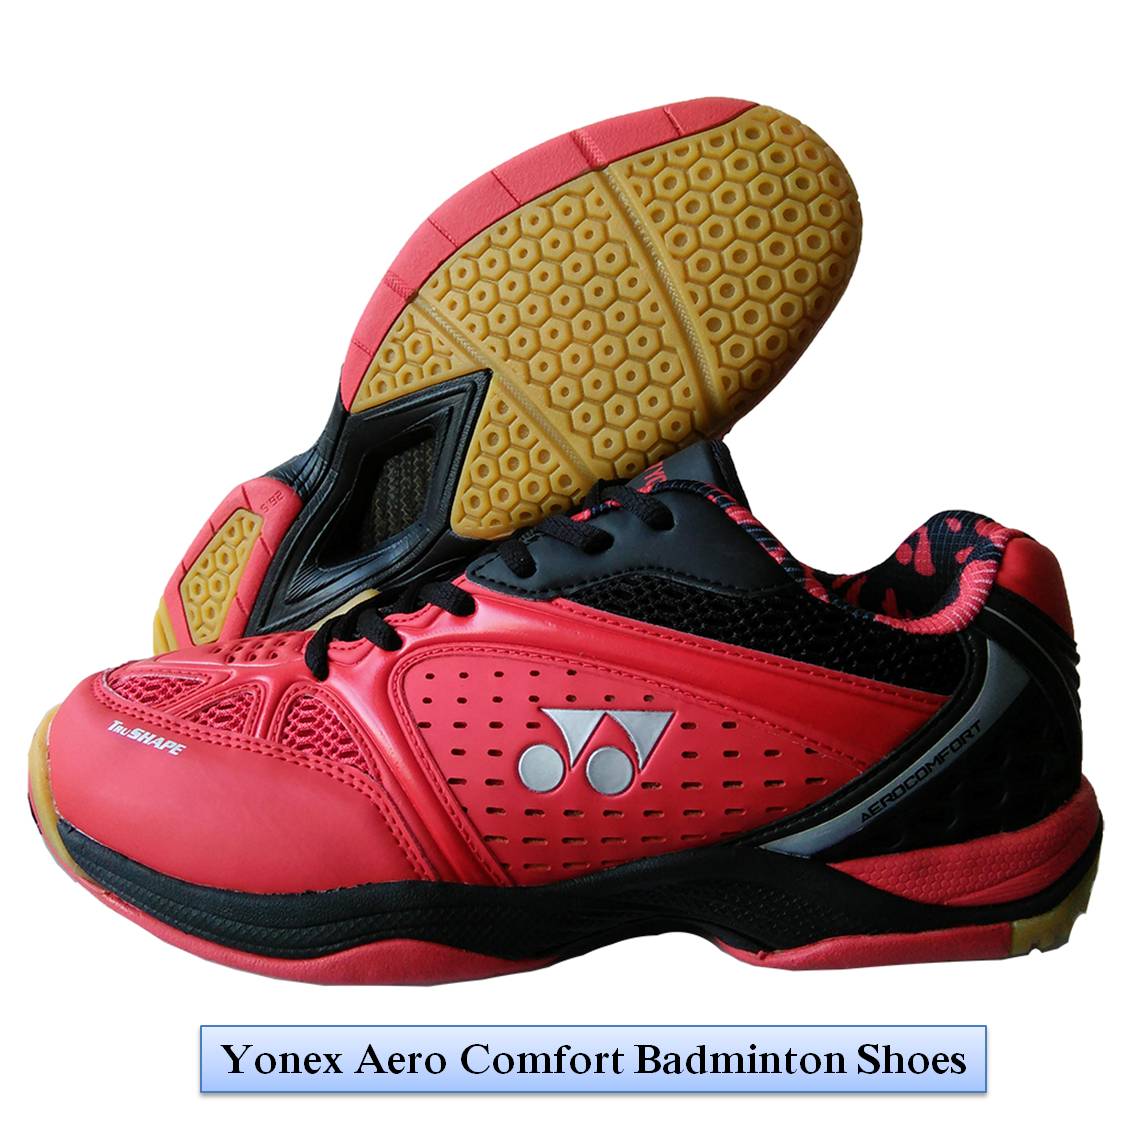 Yonex Aero Comfort